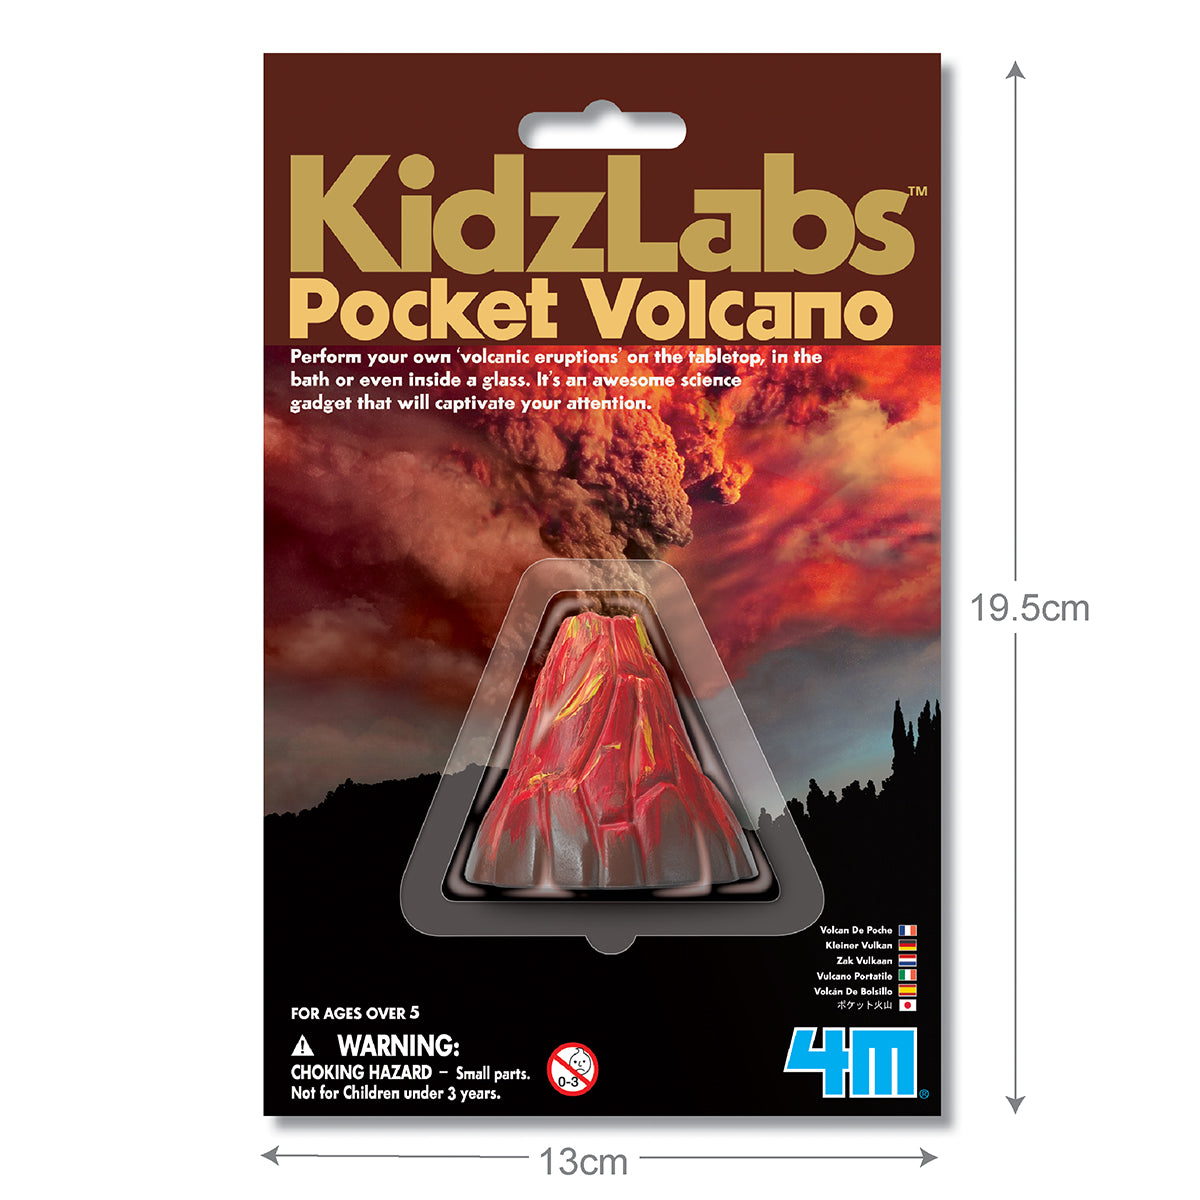 KidzLabs Pocket Volcano